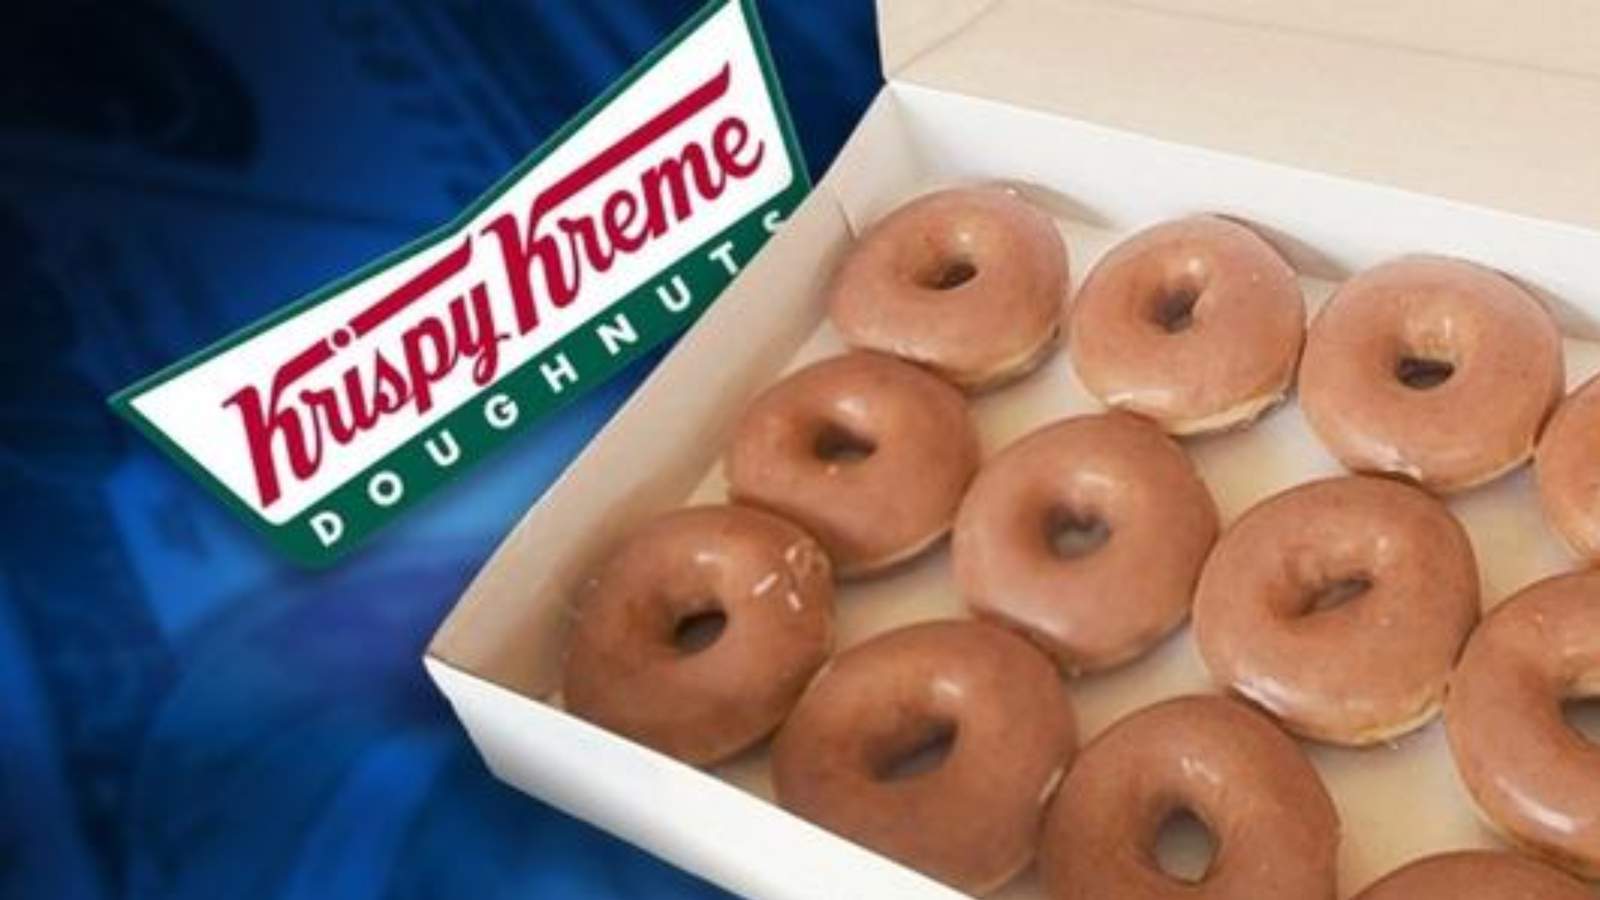 How-to-score-a-dozen-Krispy-Kreme-donuts-for-1-Saturday-Report.jpg